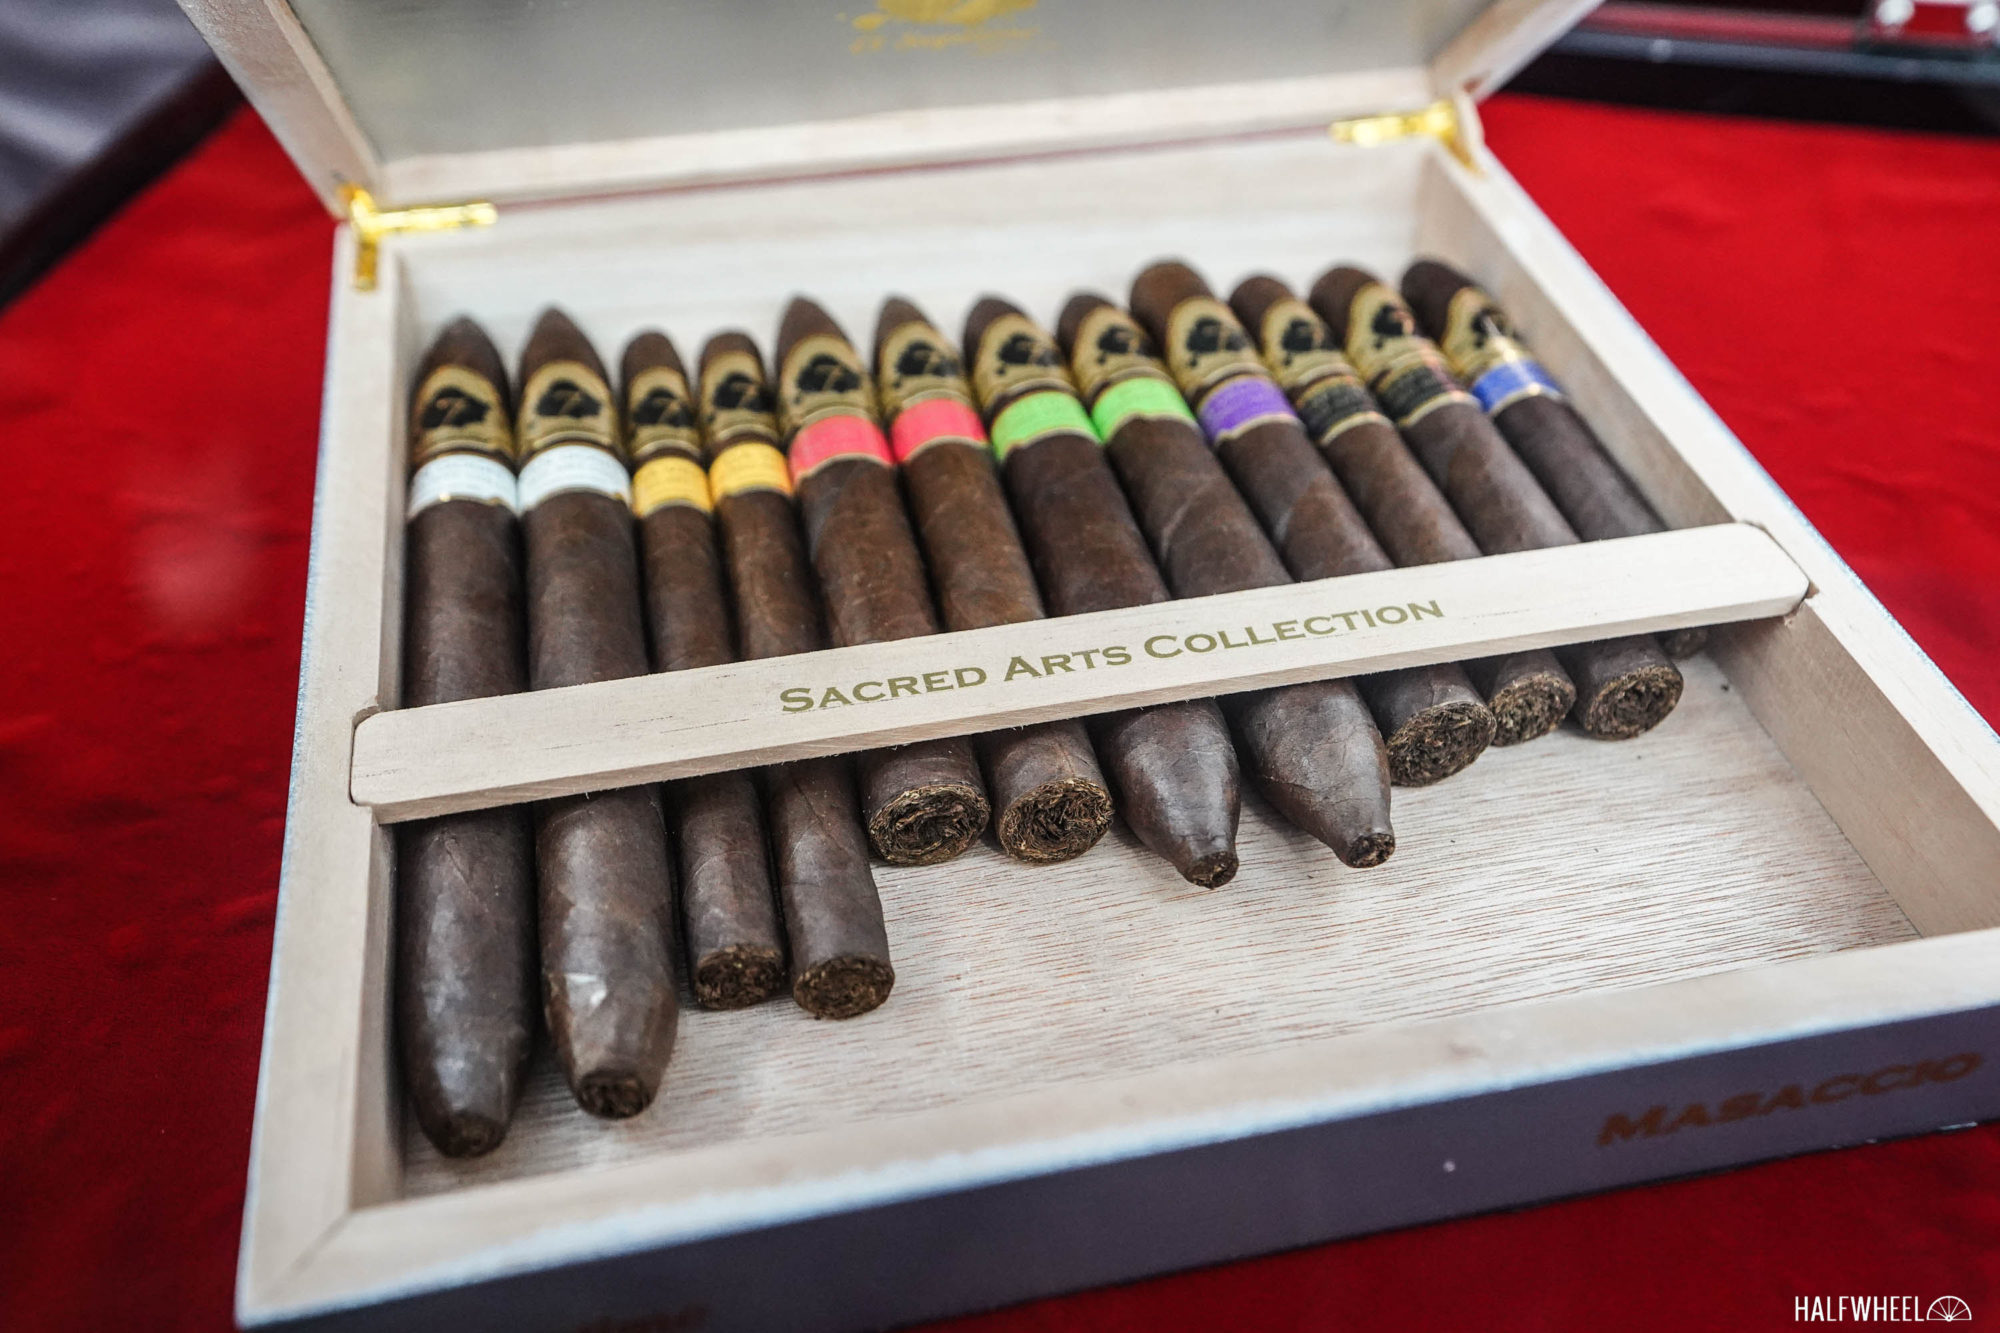 Shop Now - Travel Cases - El Septimo Cigars